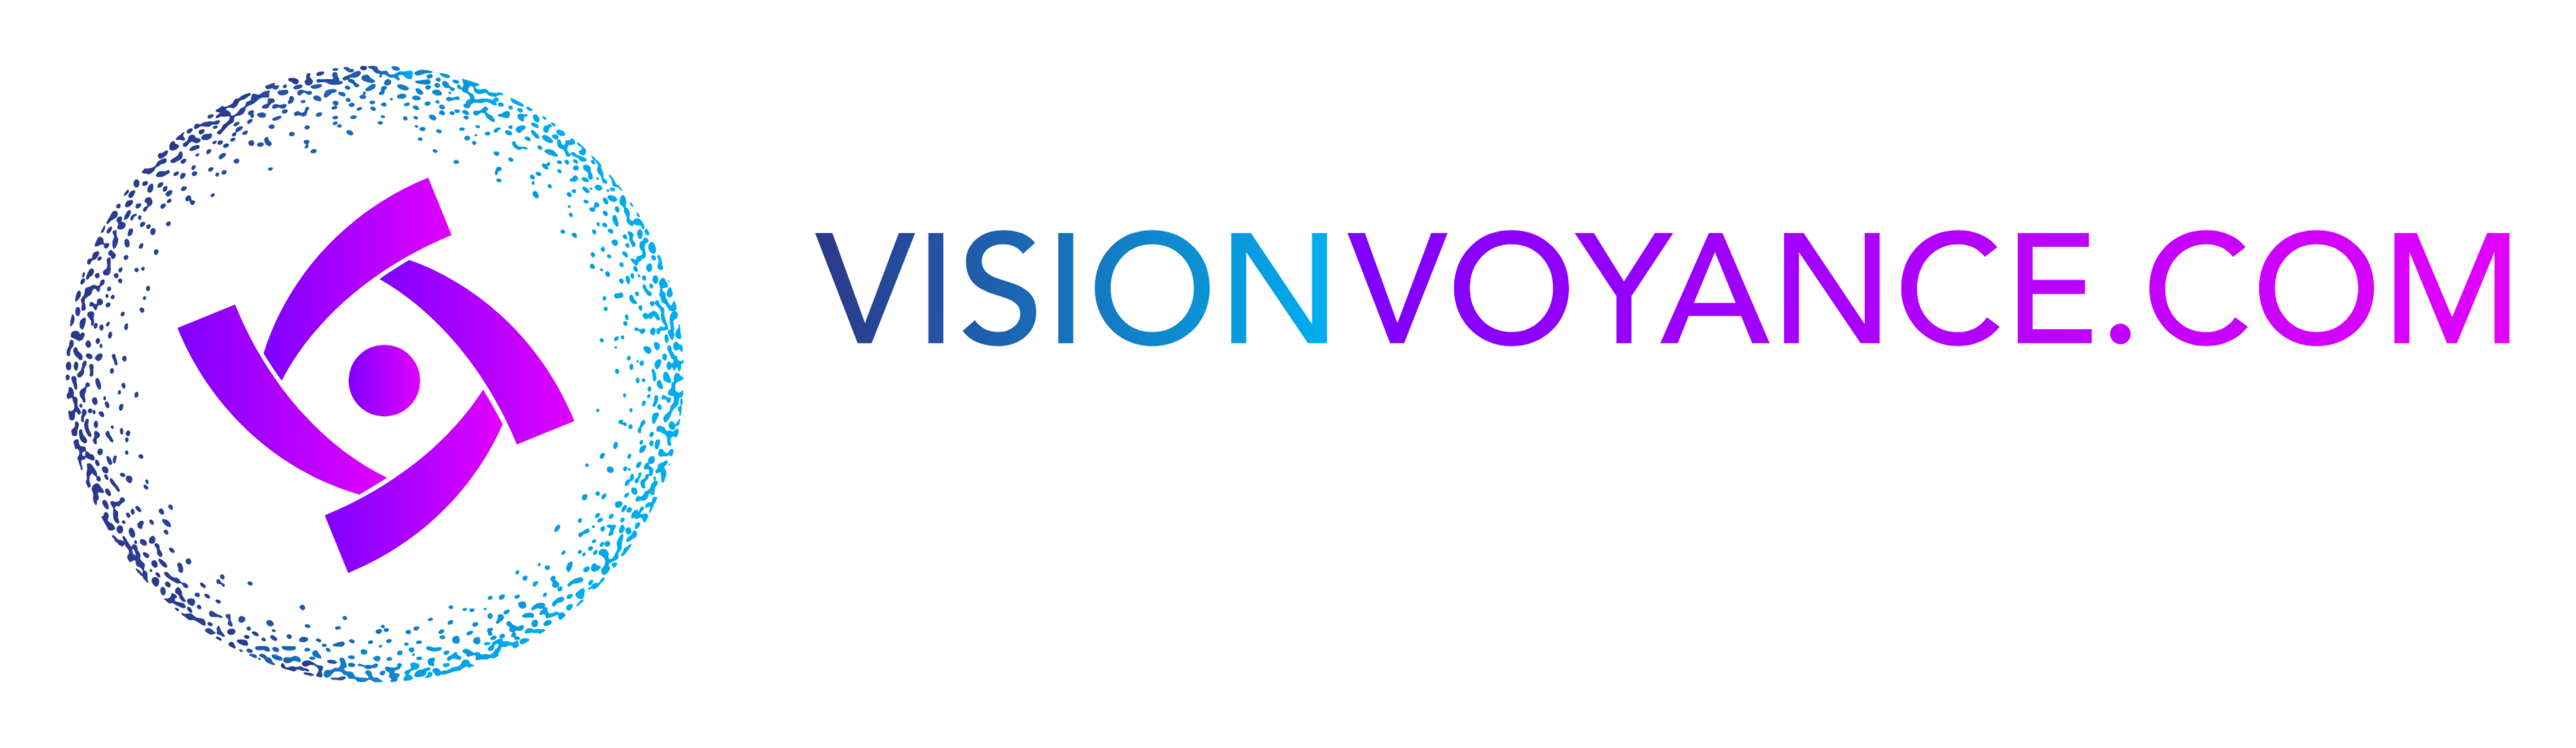 vision voyance